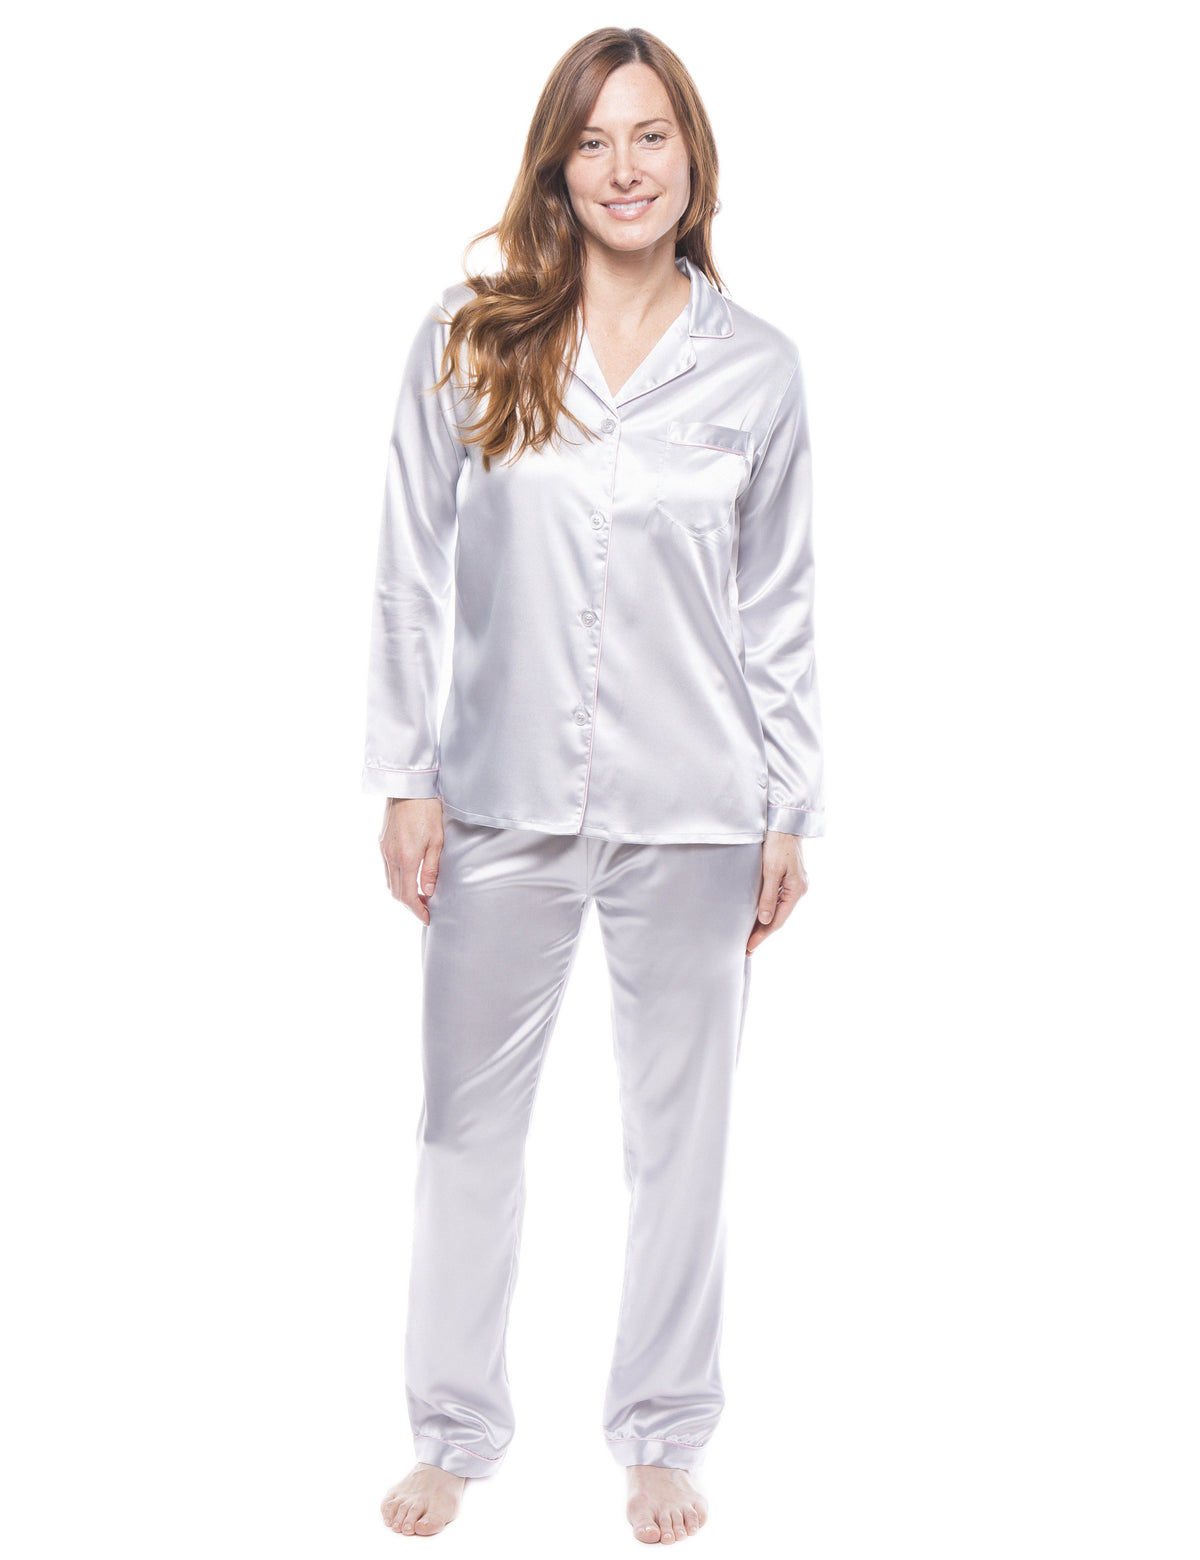 Women's Satin Pajama/Sleepwear Set - Light Grey